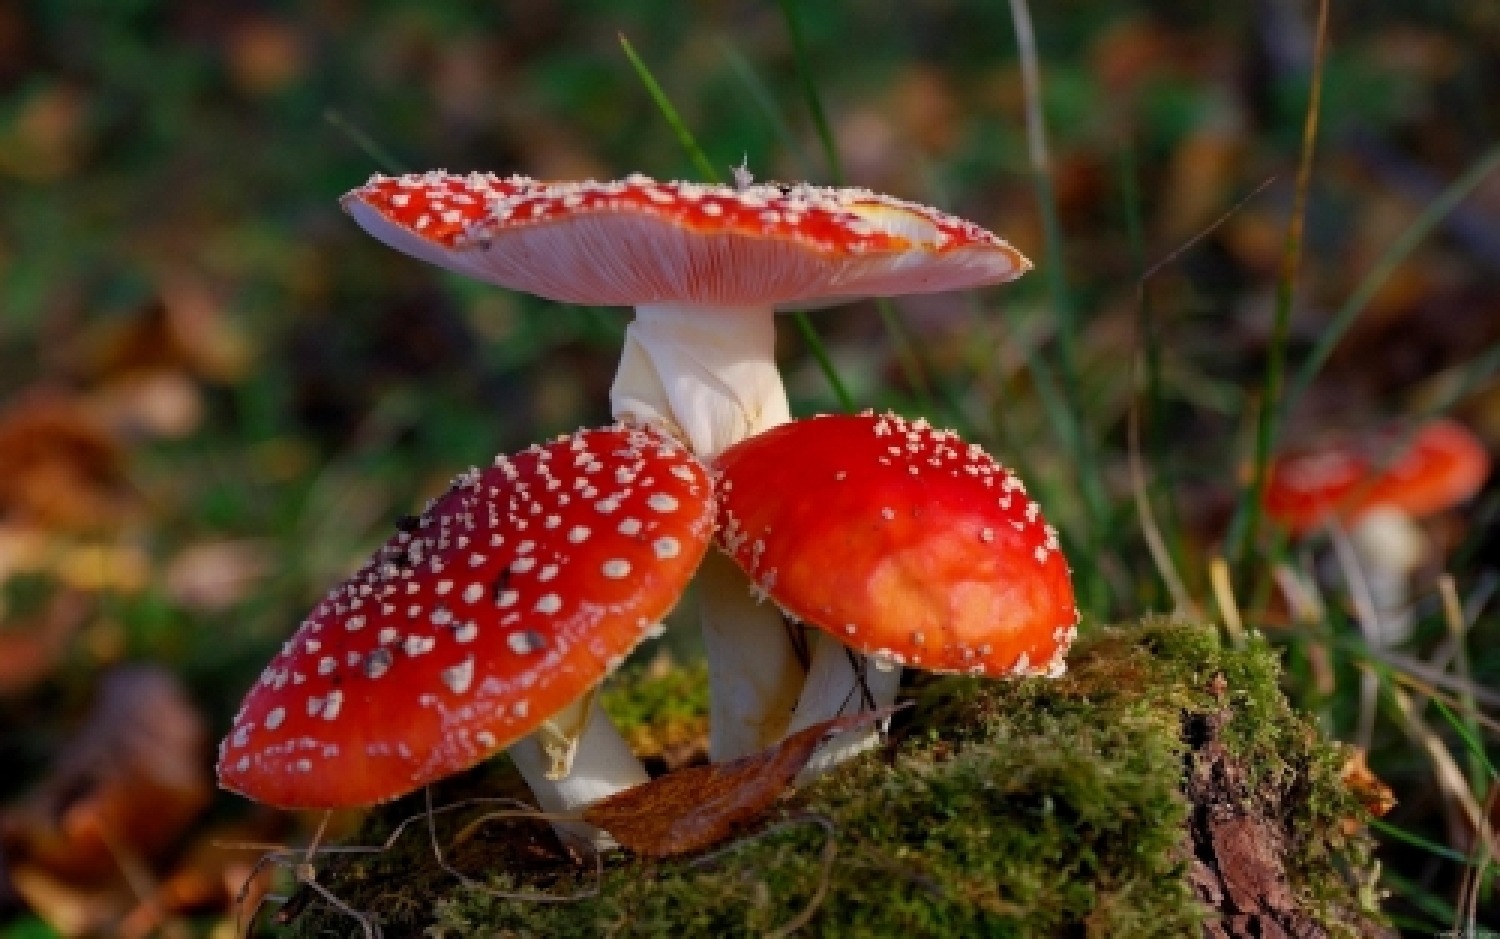 red-mushrooms.jpg